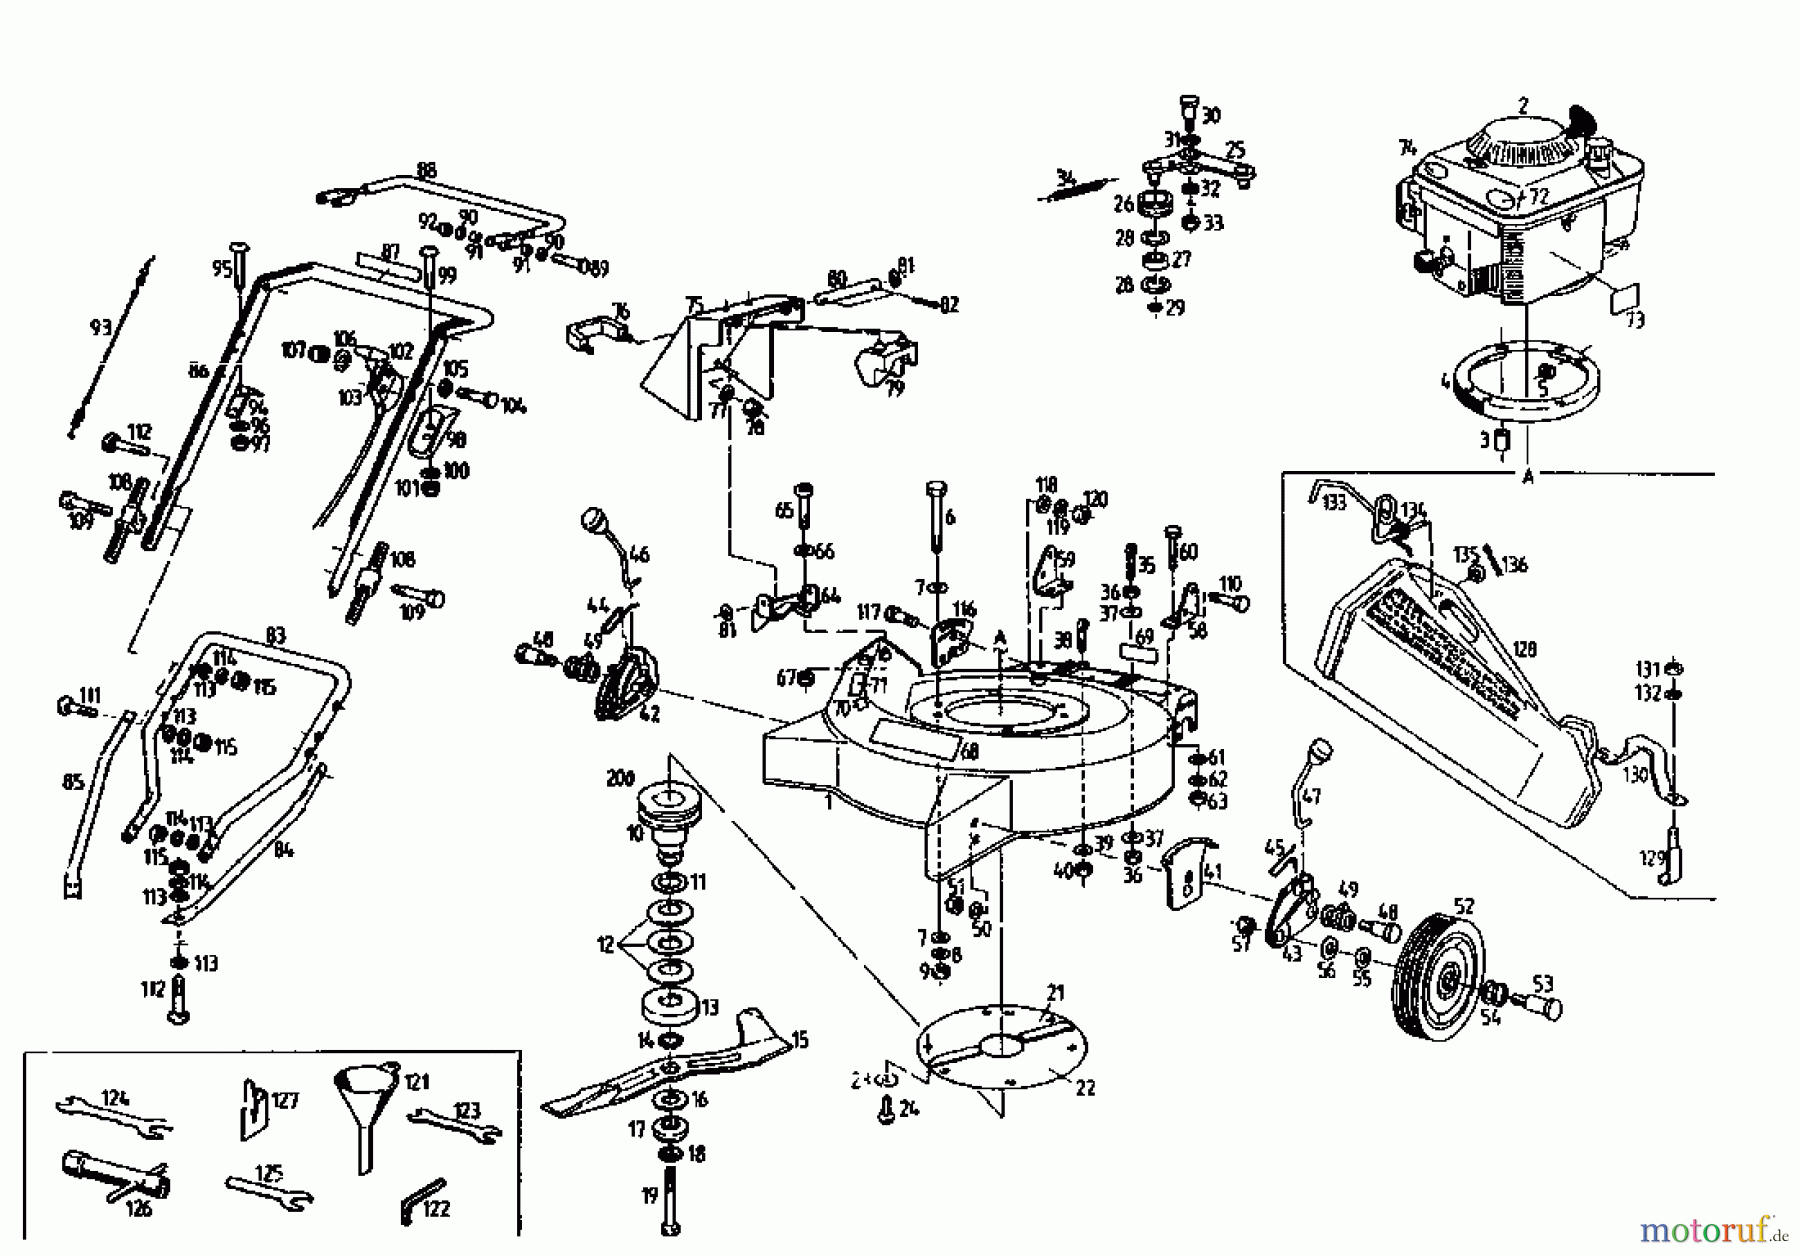  Gutbrod Petrol mower self propelled MS 482 PR 04016.03  (1993) Basic machine